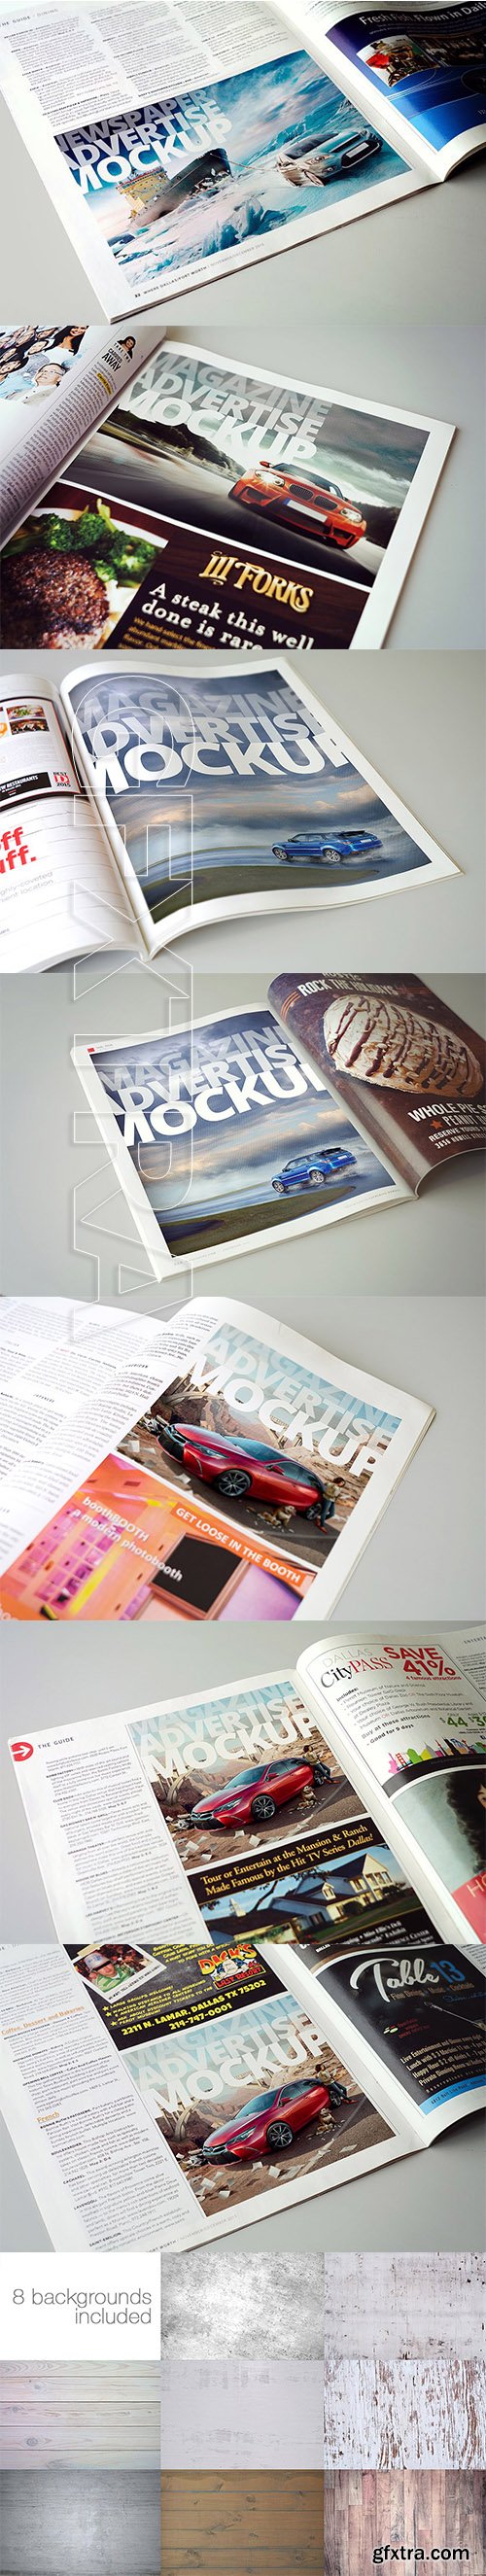 CreativeMarket - Magazine Advert Mockups v2 2172784